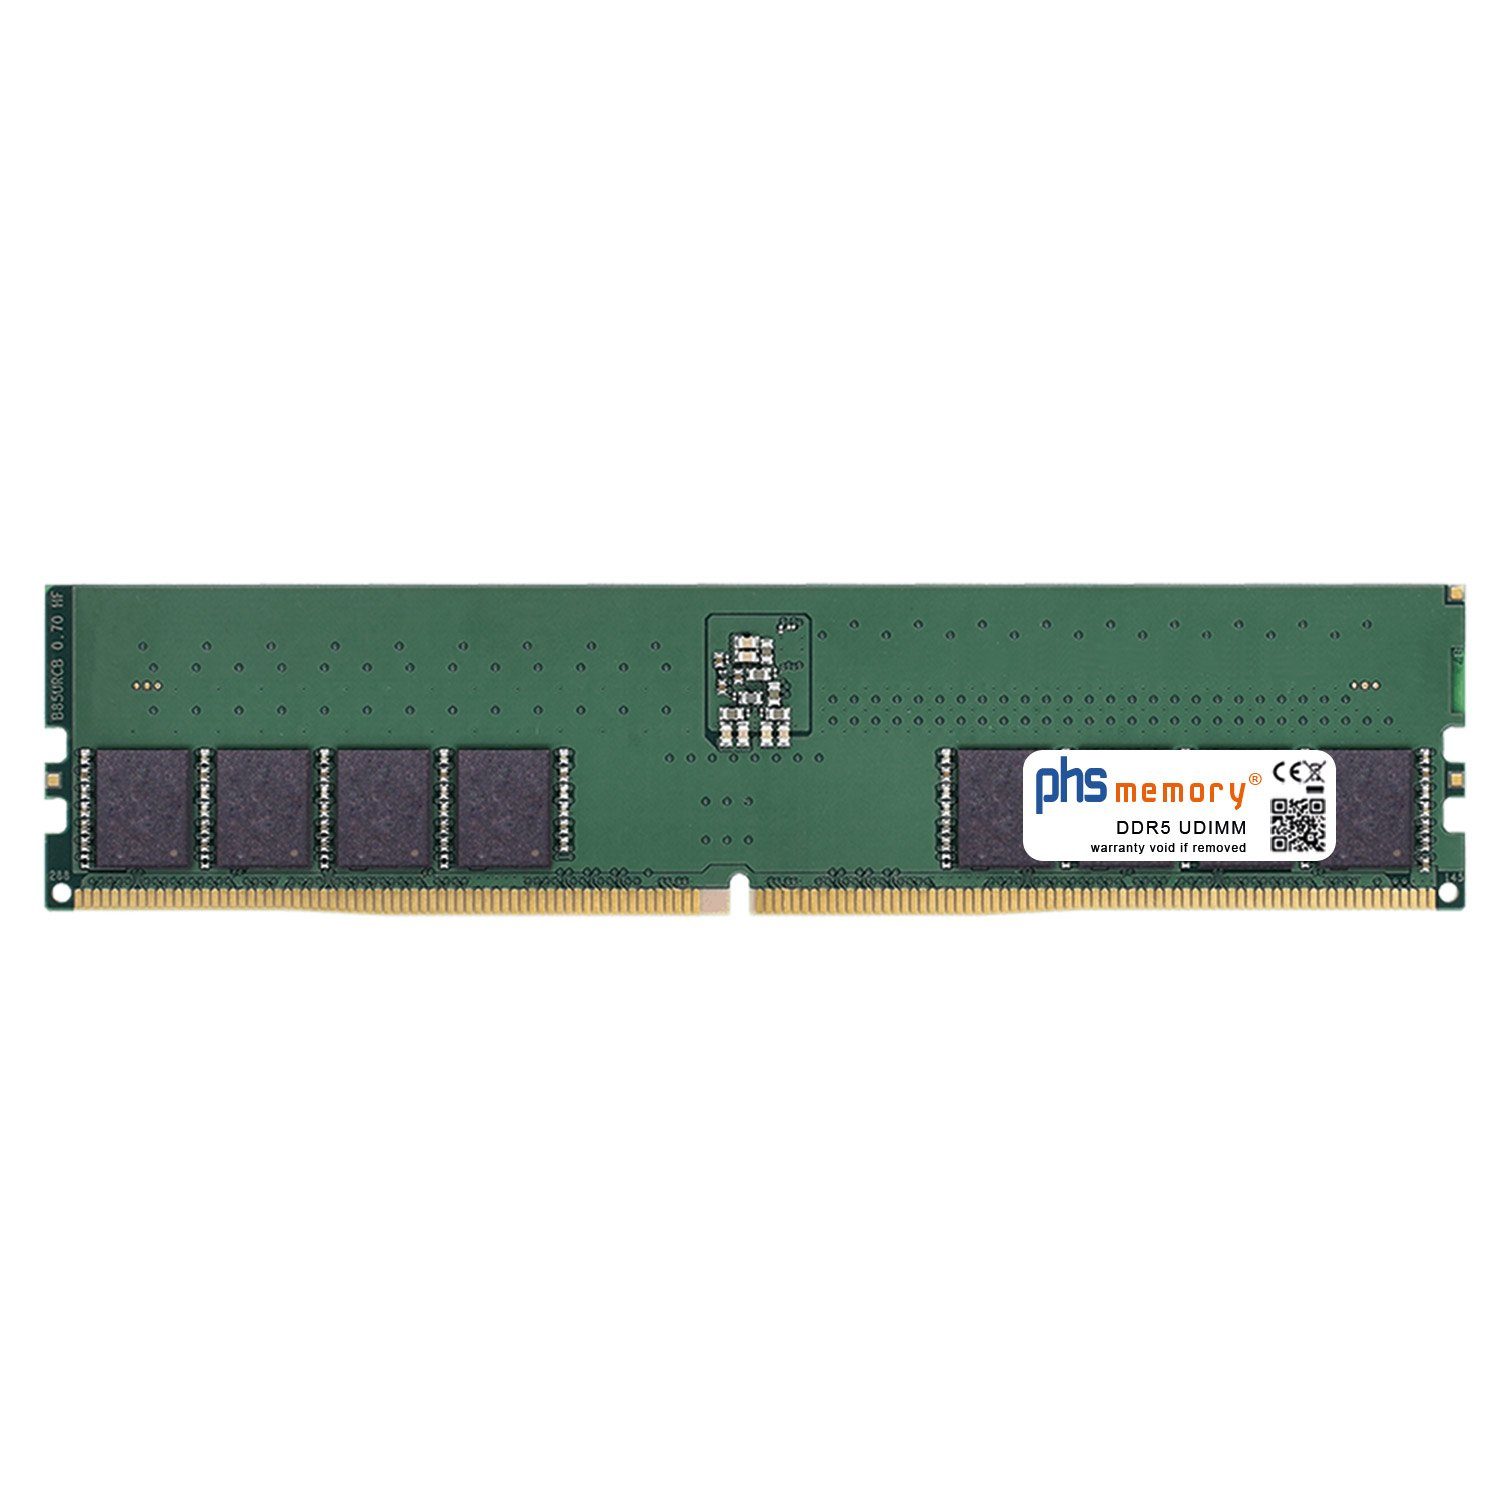 PHS-memory RAM für Captiva Ultimate Gaming I70-956 Arbeitsspeicher